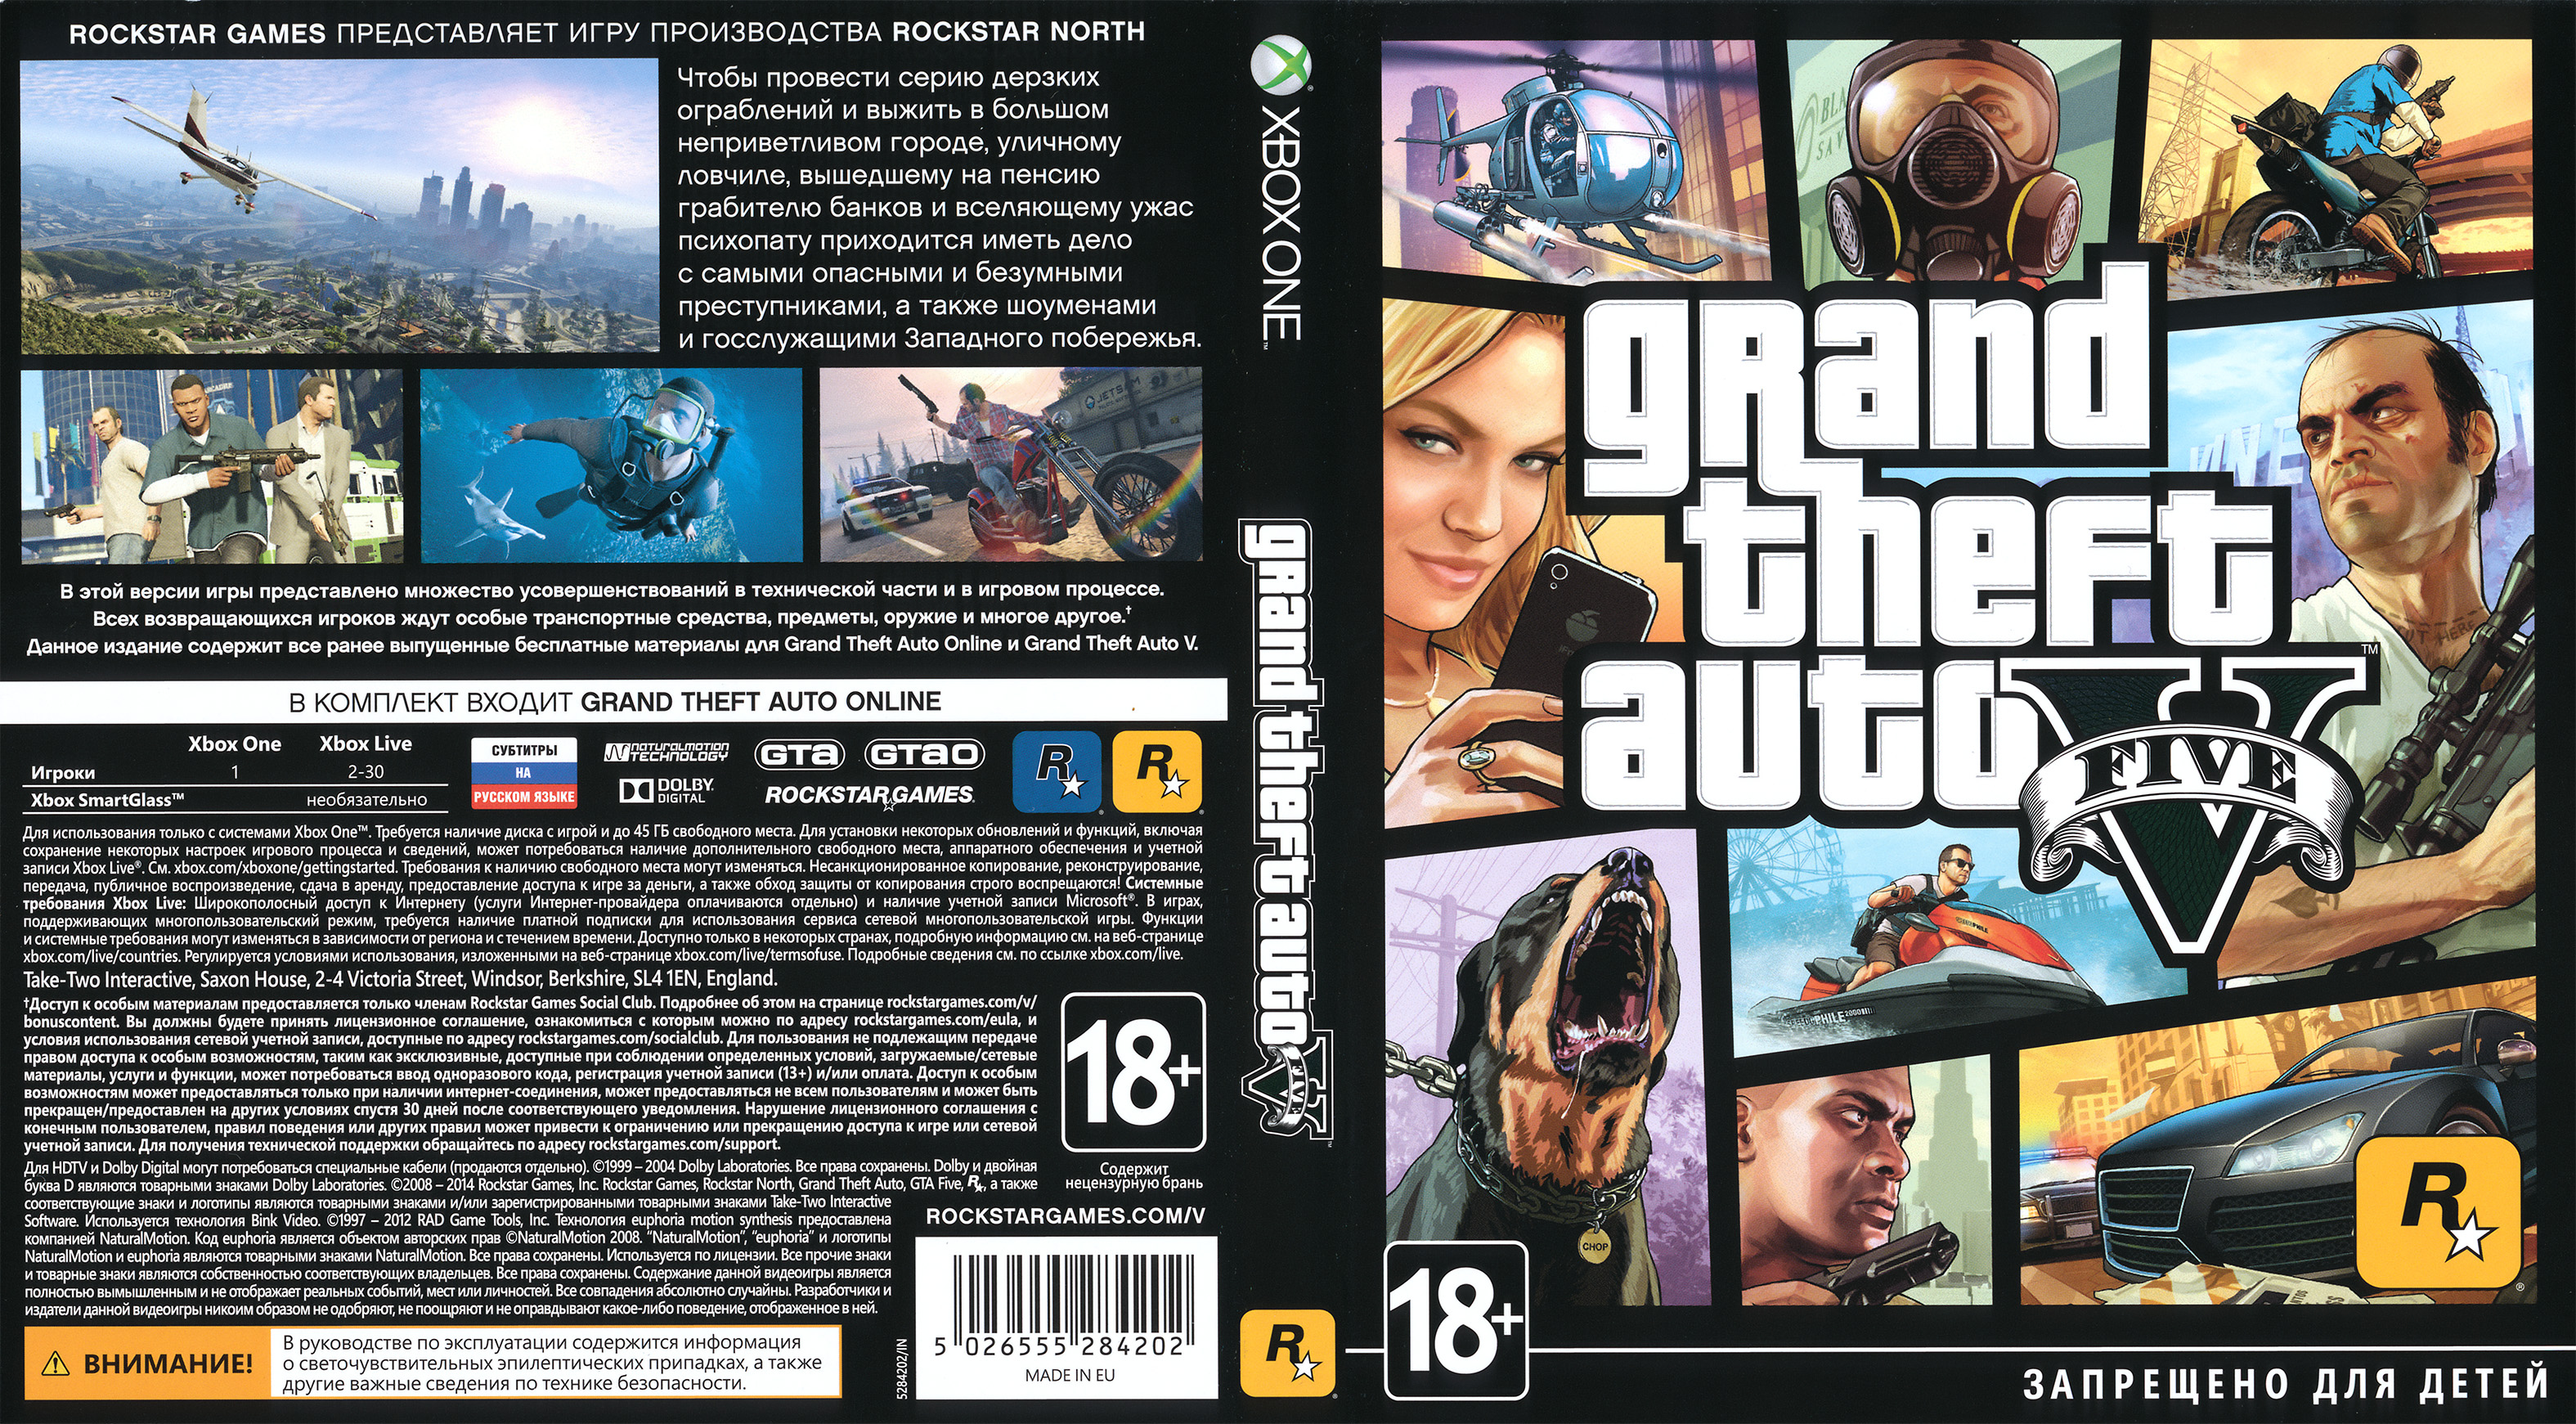 Buy Grand Theft Auto V (Xbox One)